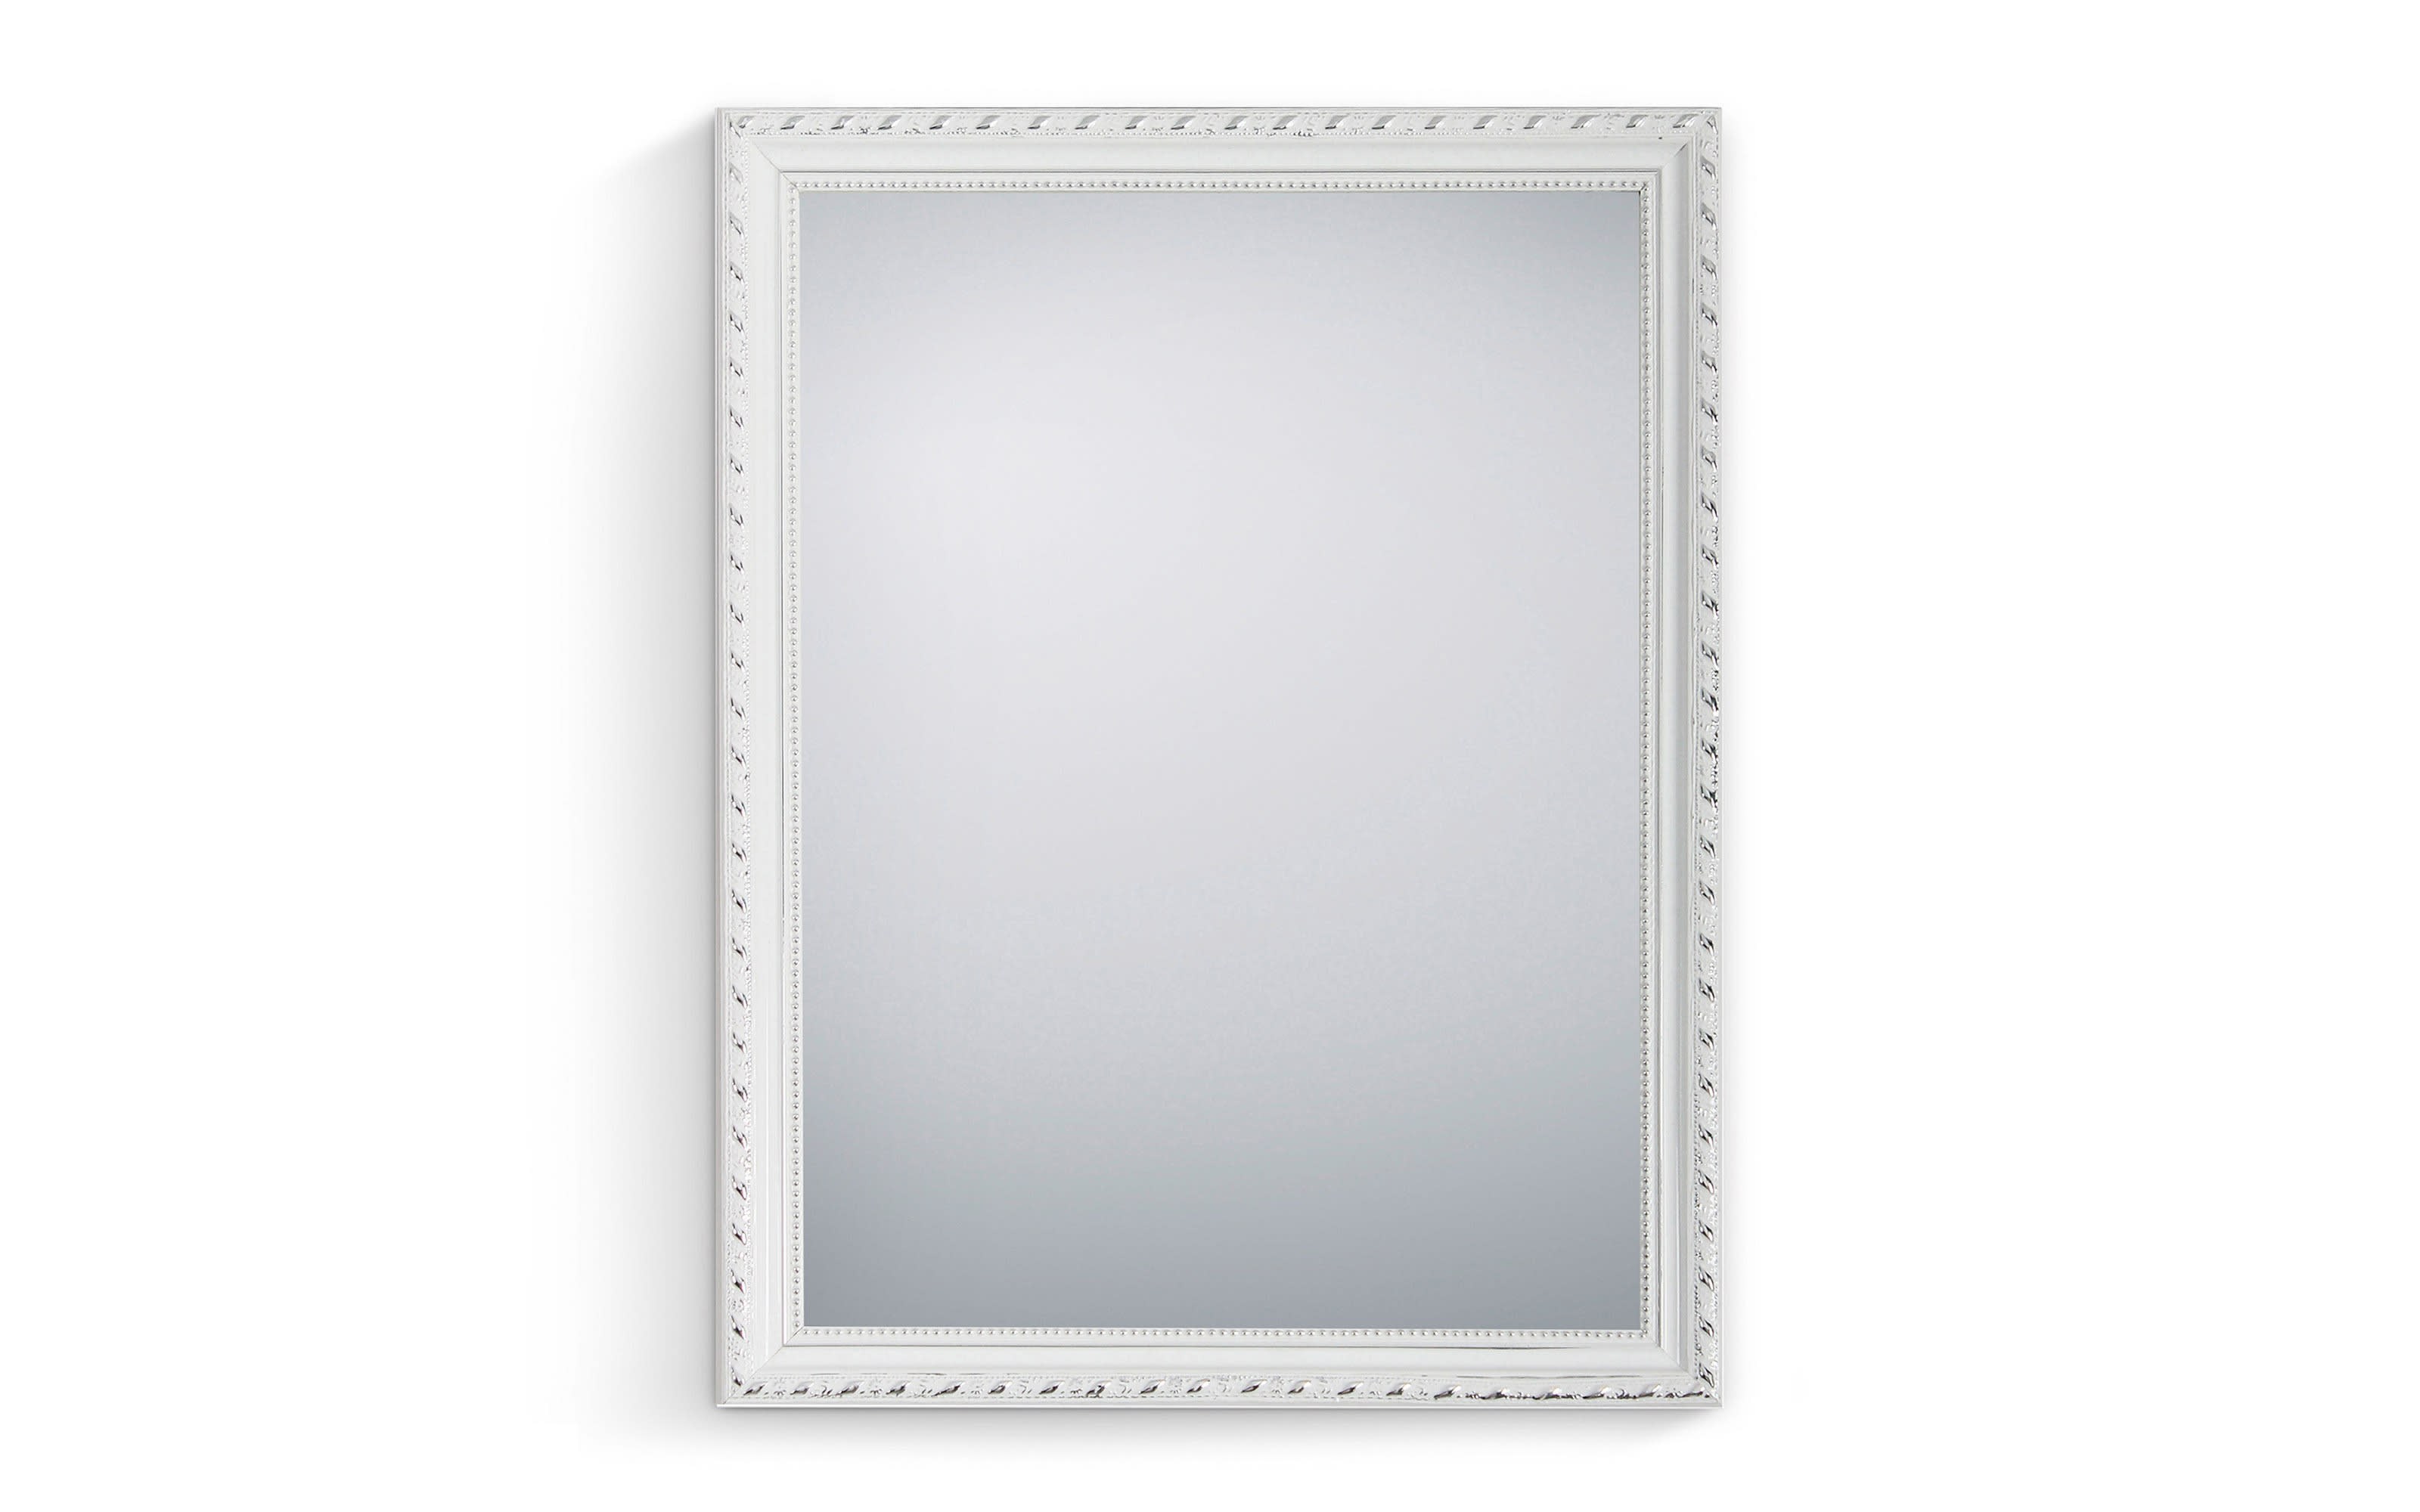 Rahmenspiegel Loreley in weiß, 34 x 45 cm